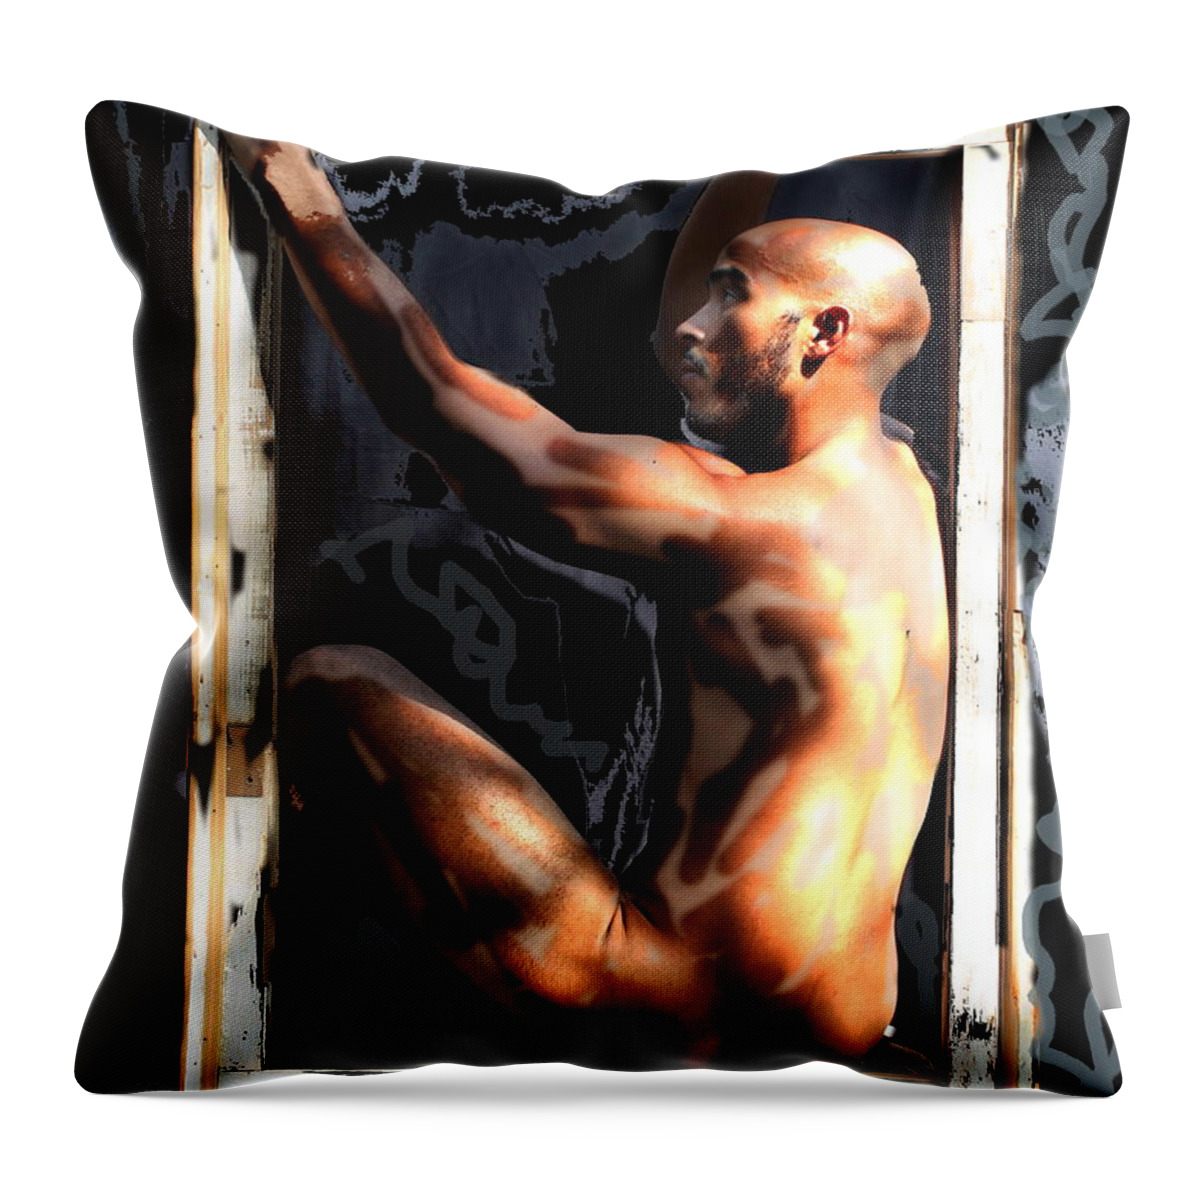 Figure Throw Pillow featuring the photograph Fantasy Frame by Robert D McBain